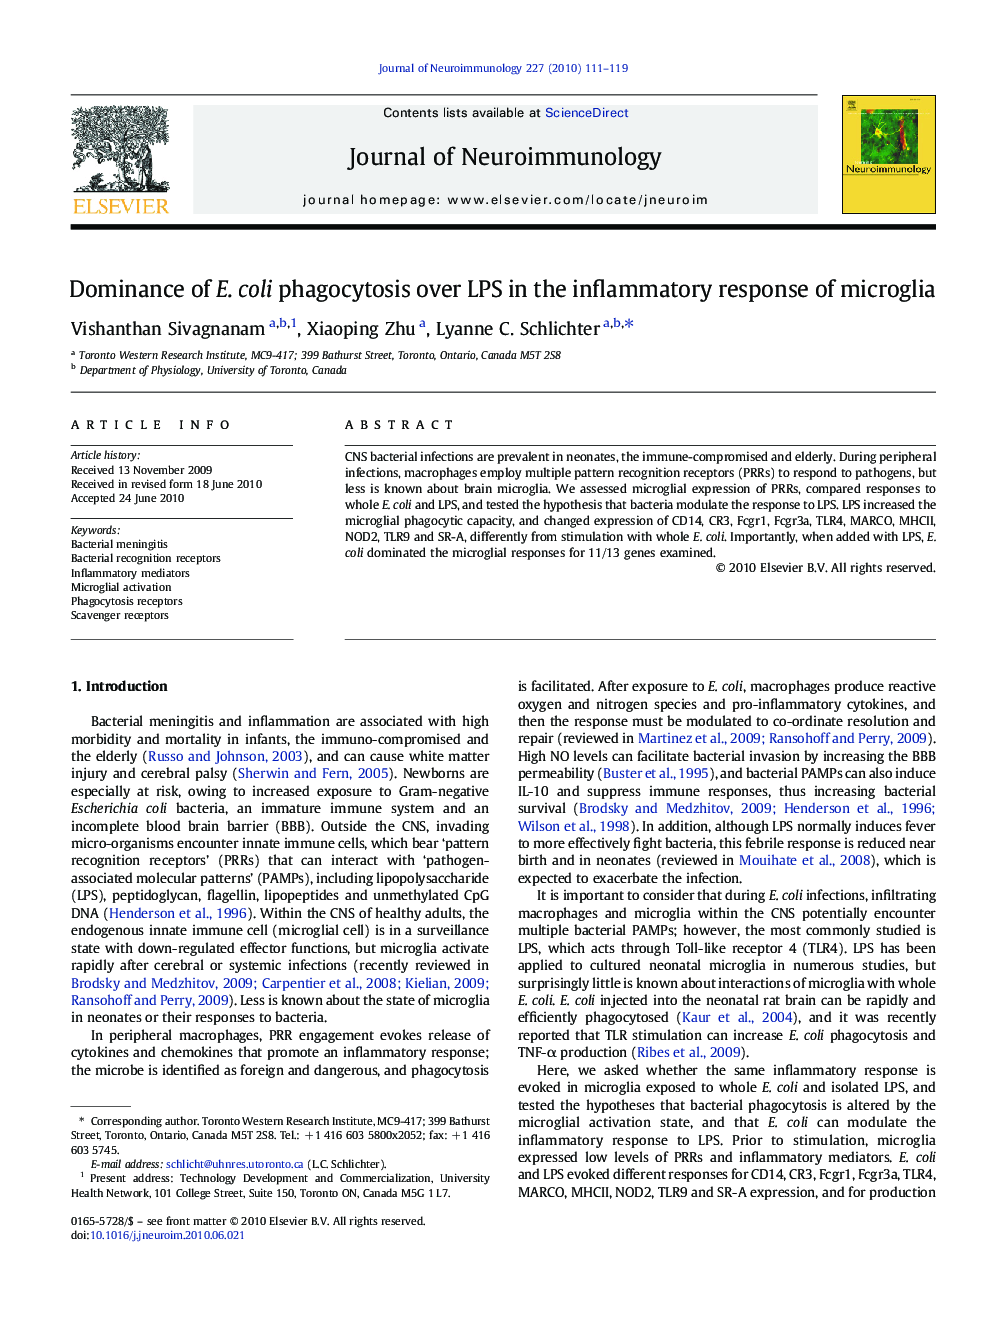 Dominance of E. coli phagocytosis over LPS in the inflammatory response of microglia